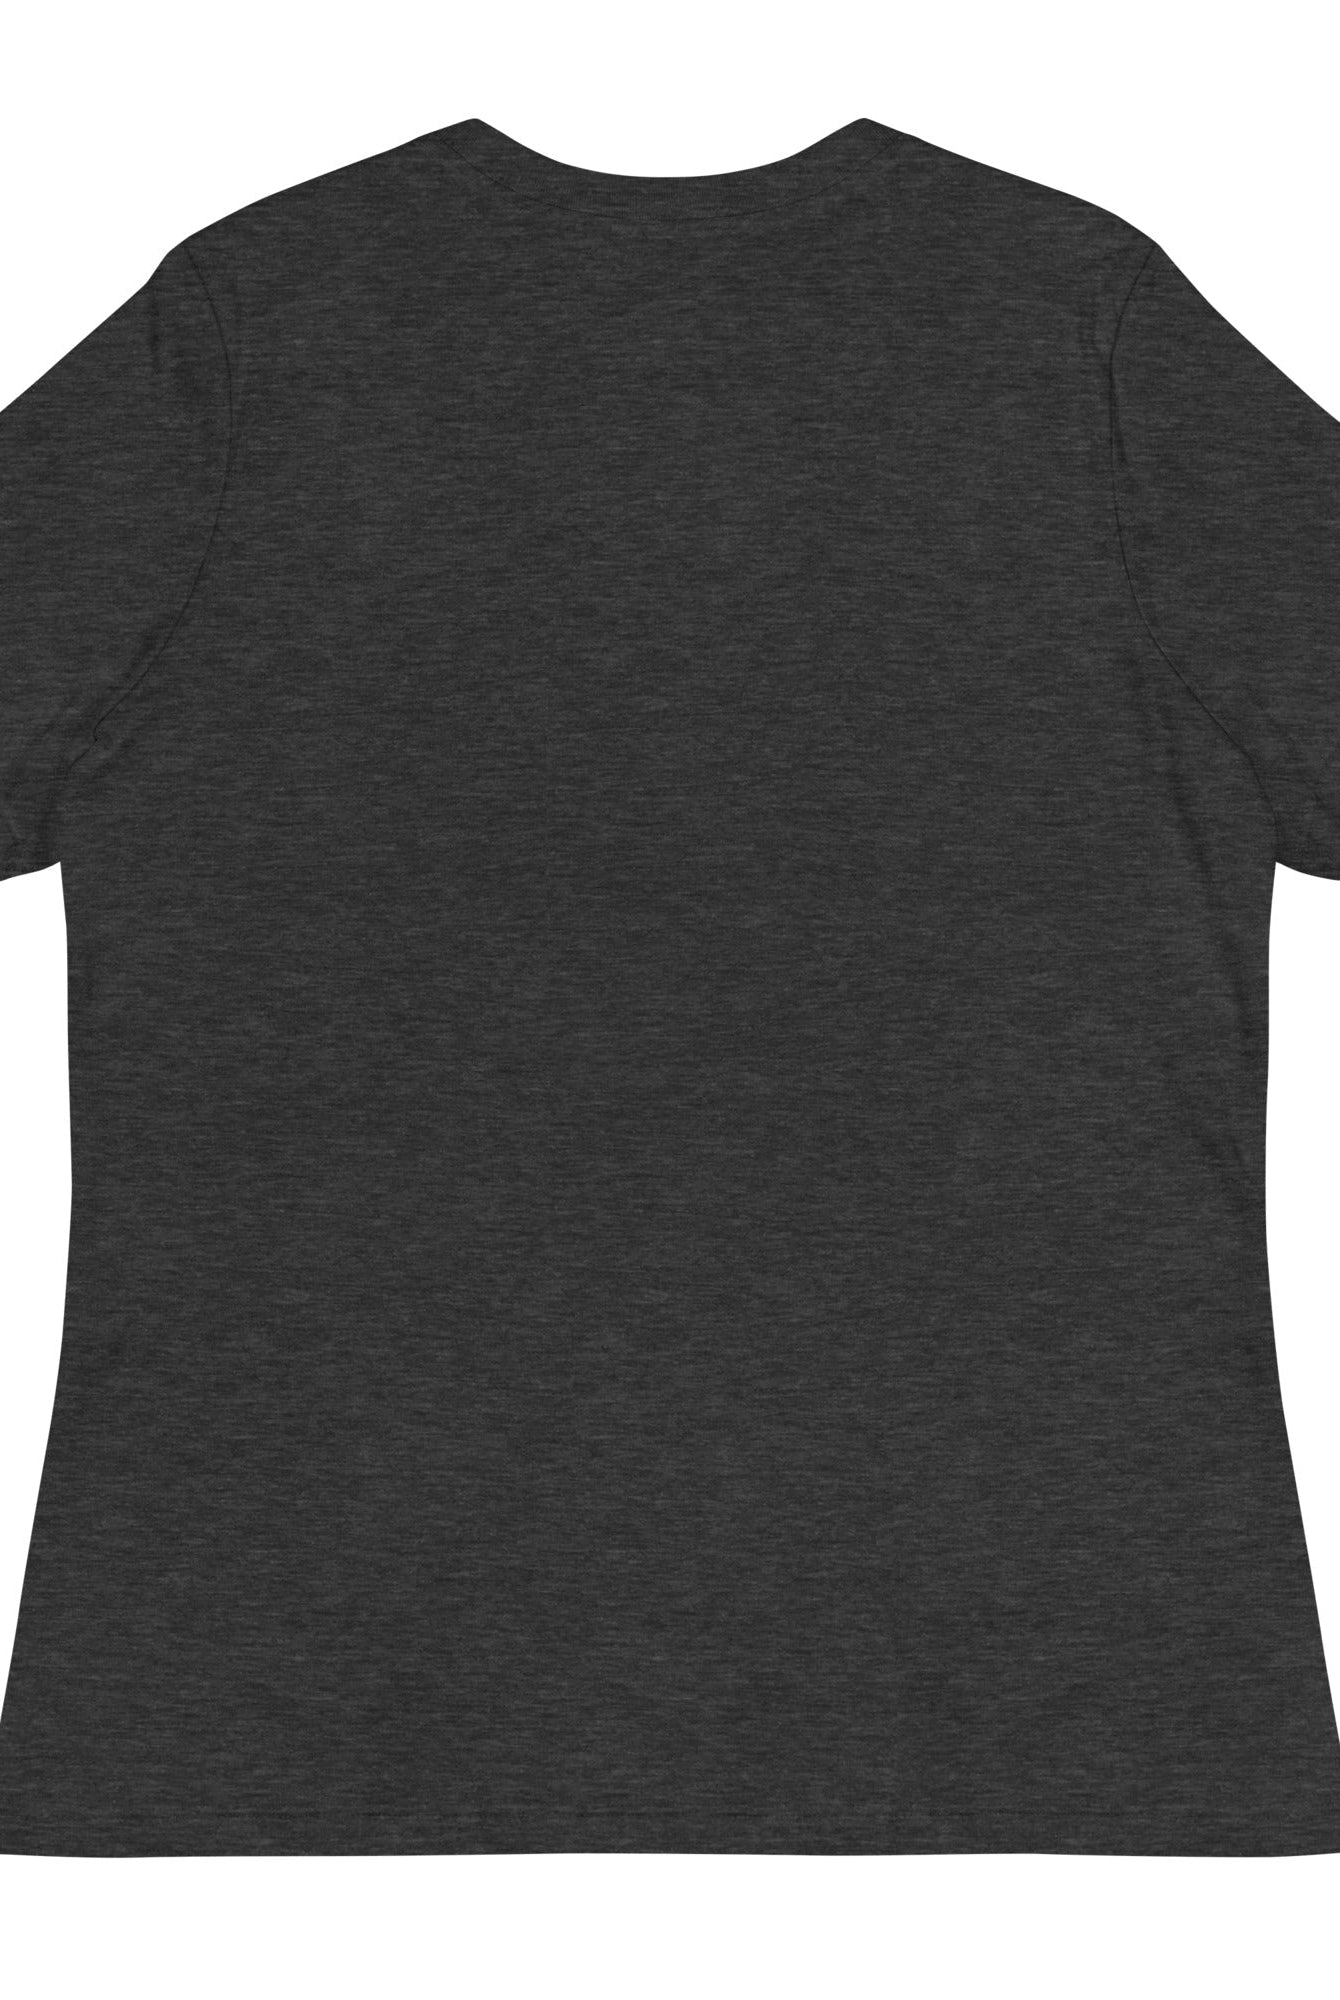 ESPRESSO - Women's Relaxed Fit Graphic T-Shirt in 16 Colors - Women's Relaxed Fit Graphic T-Shirt - DRAGON FOXX™ - 7218598_10193 - Dark Grey Heather - S - Athletic Heather T-shirt - Berry T-shirt - Black T-shirt